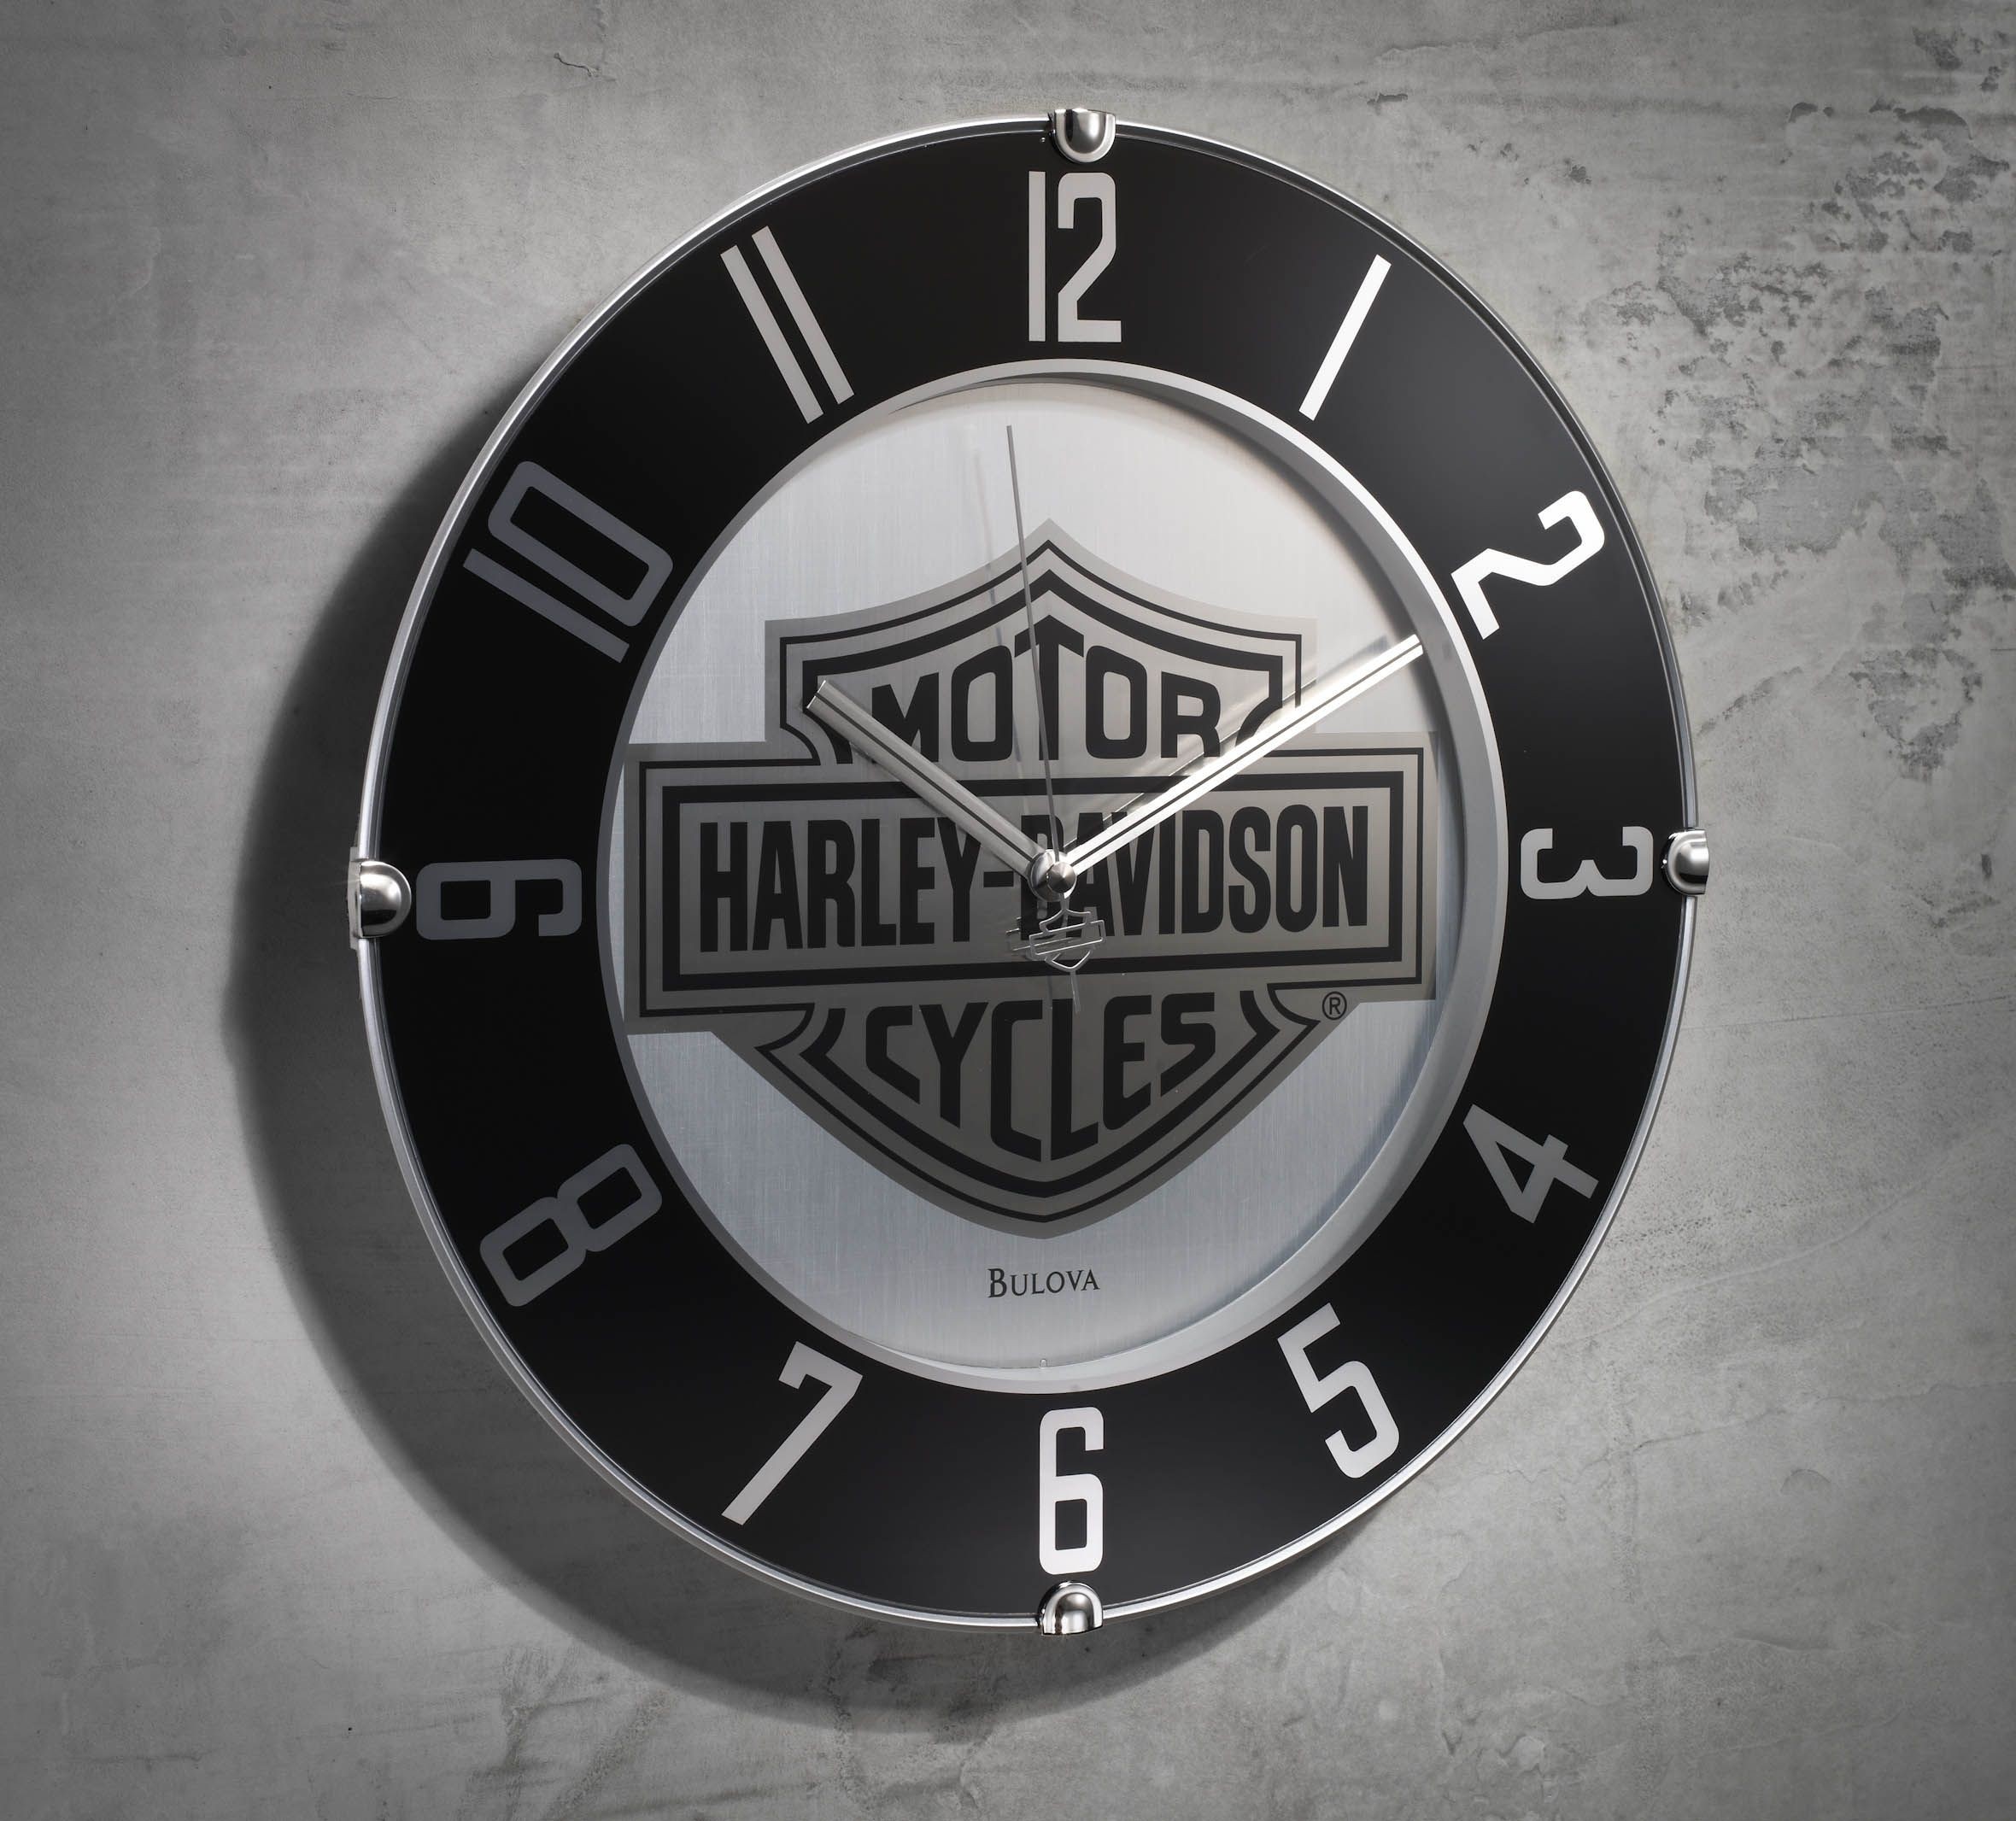 Harley davidson wall clocks 2